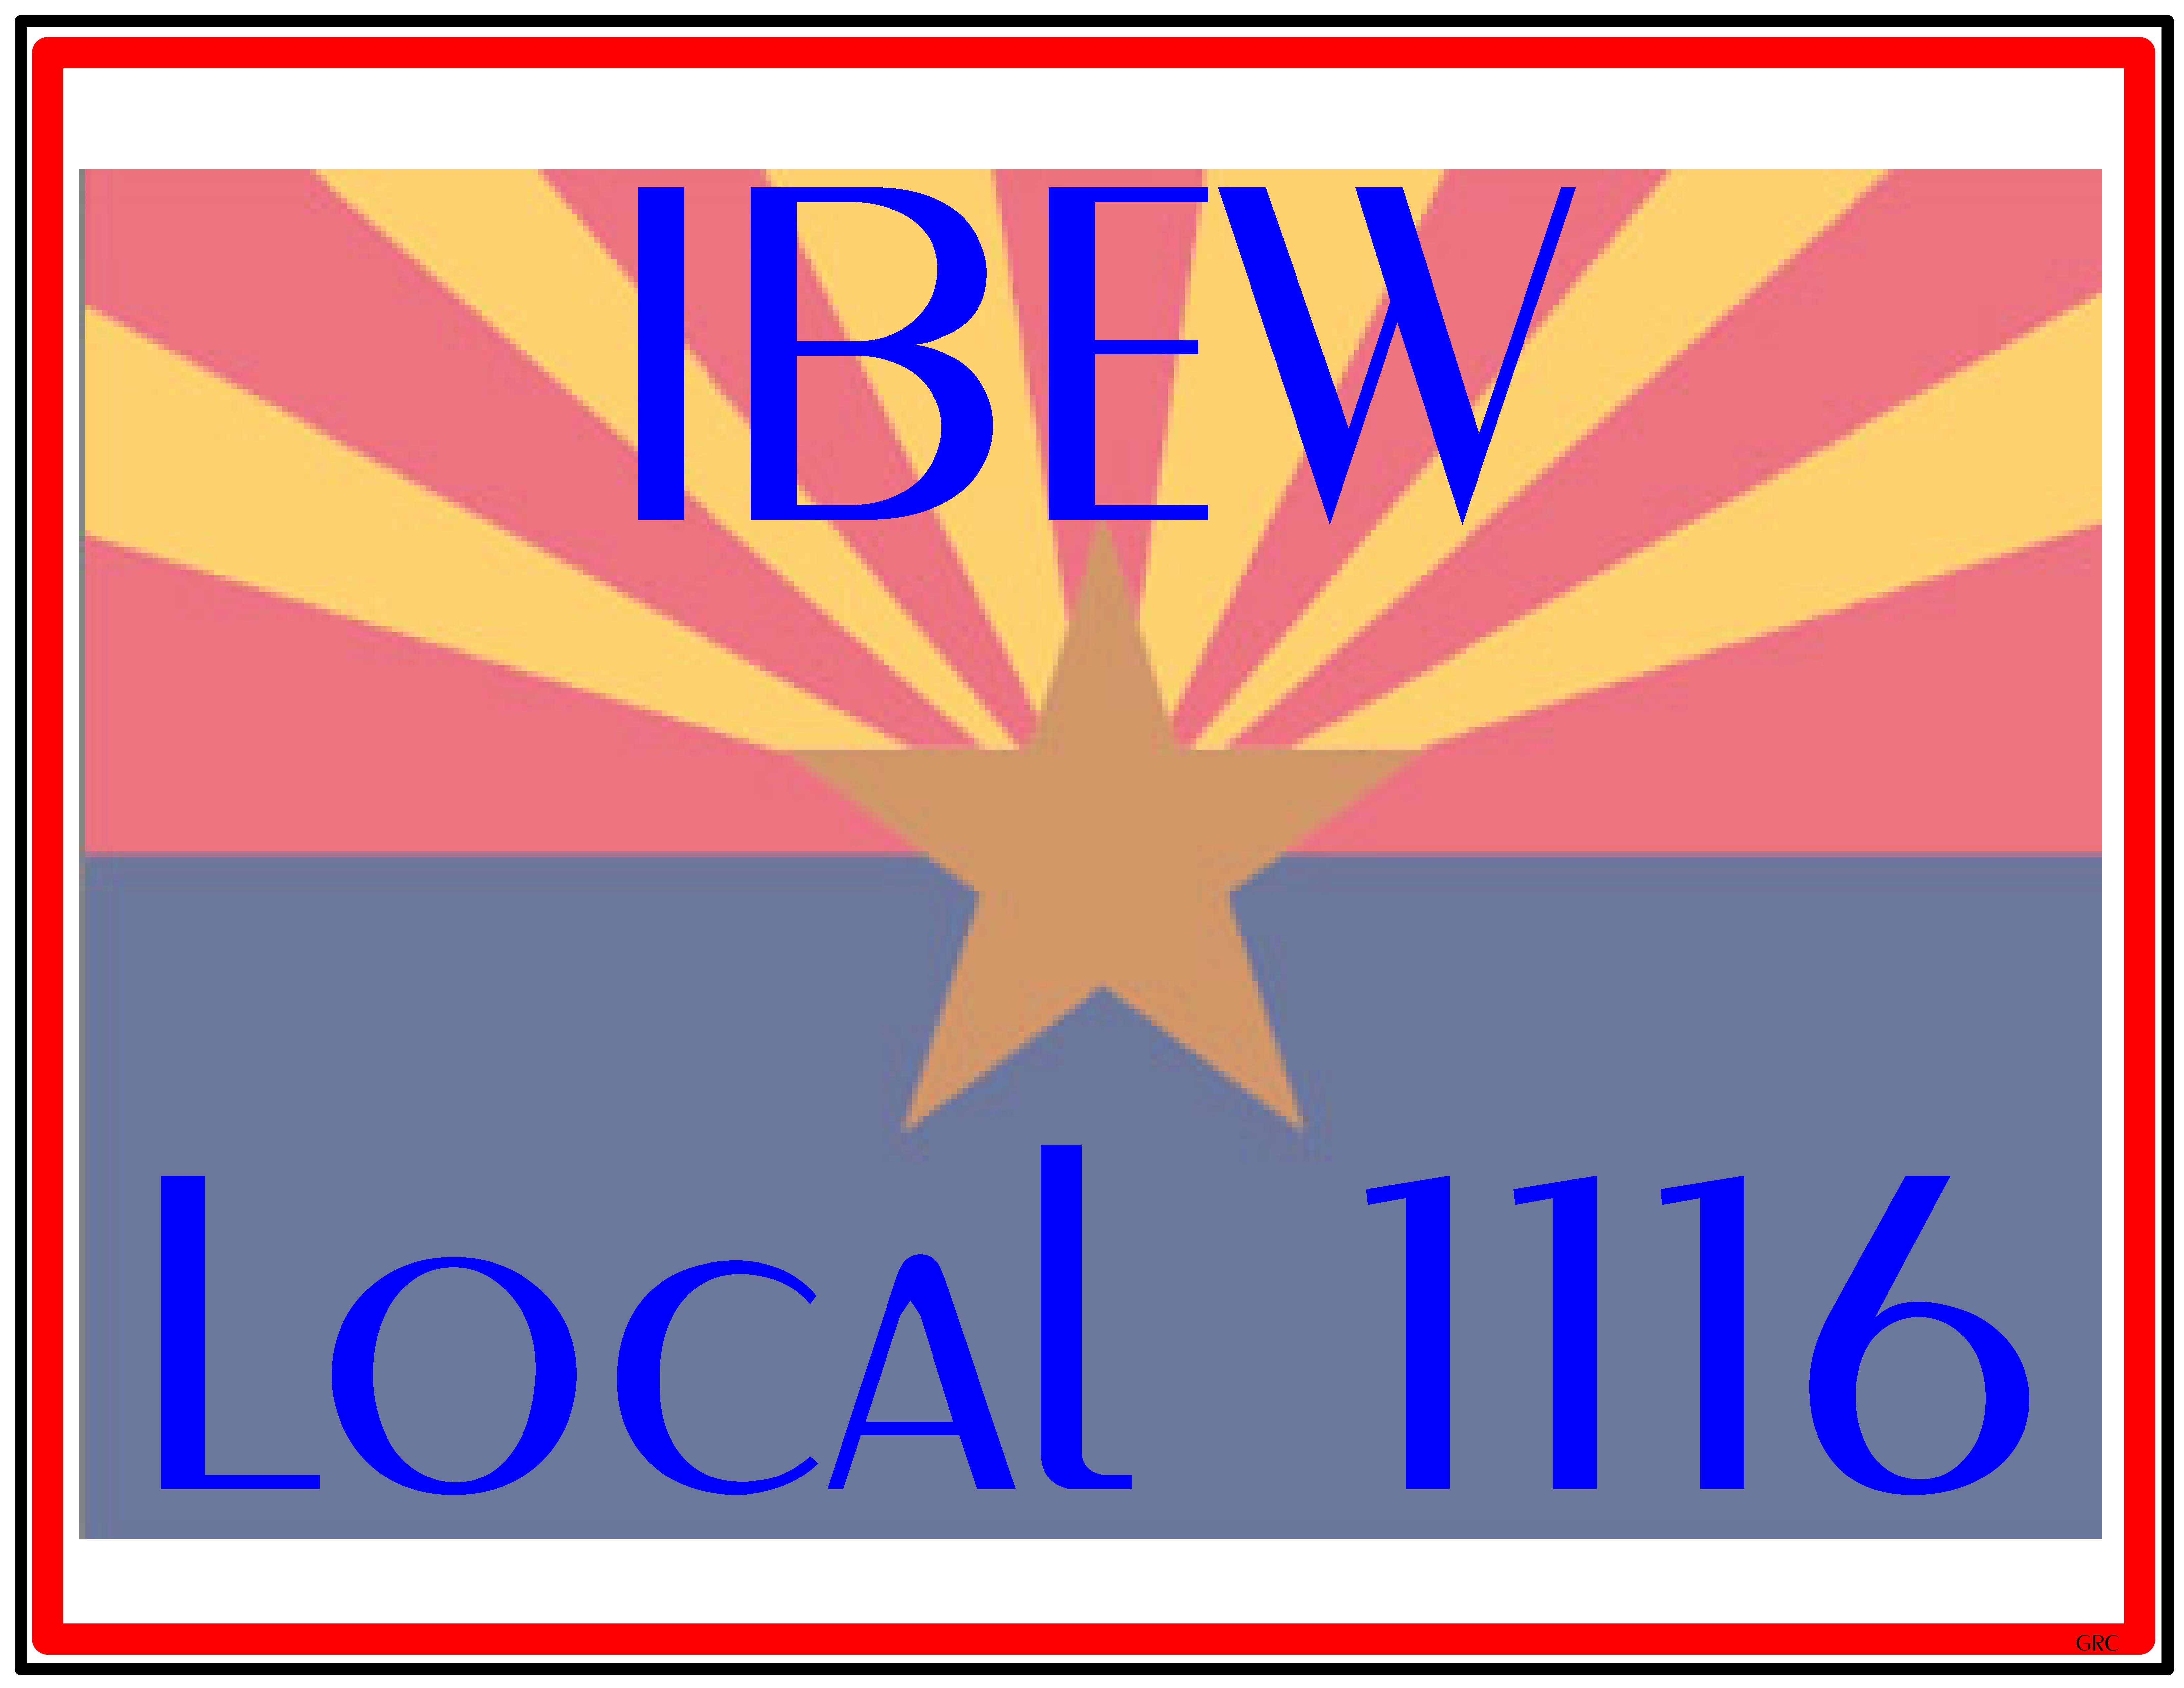 IBEW 1116